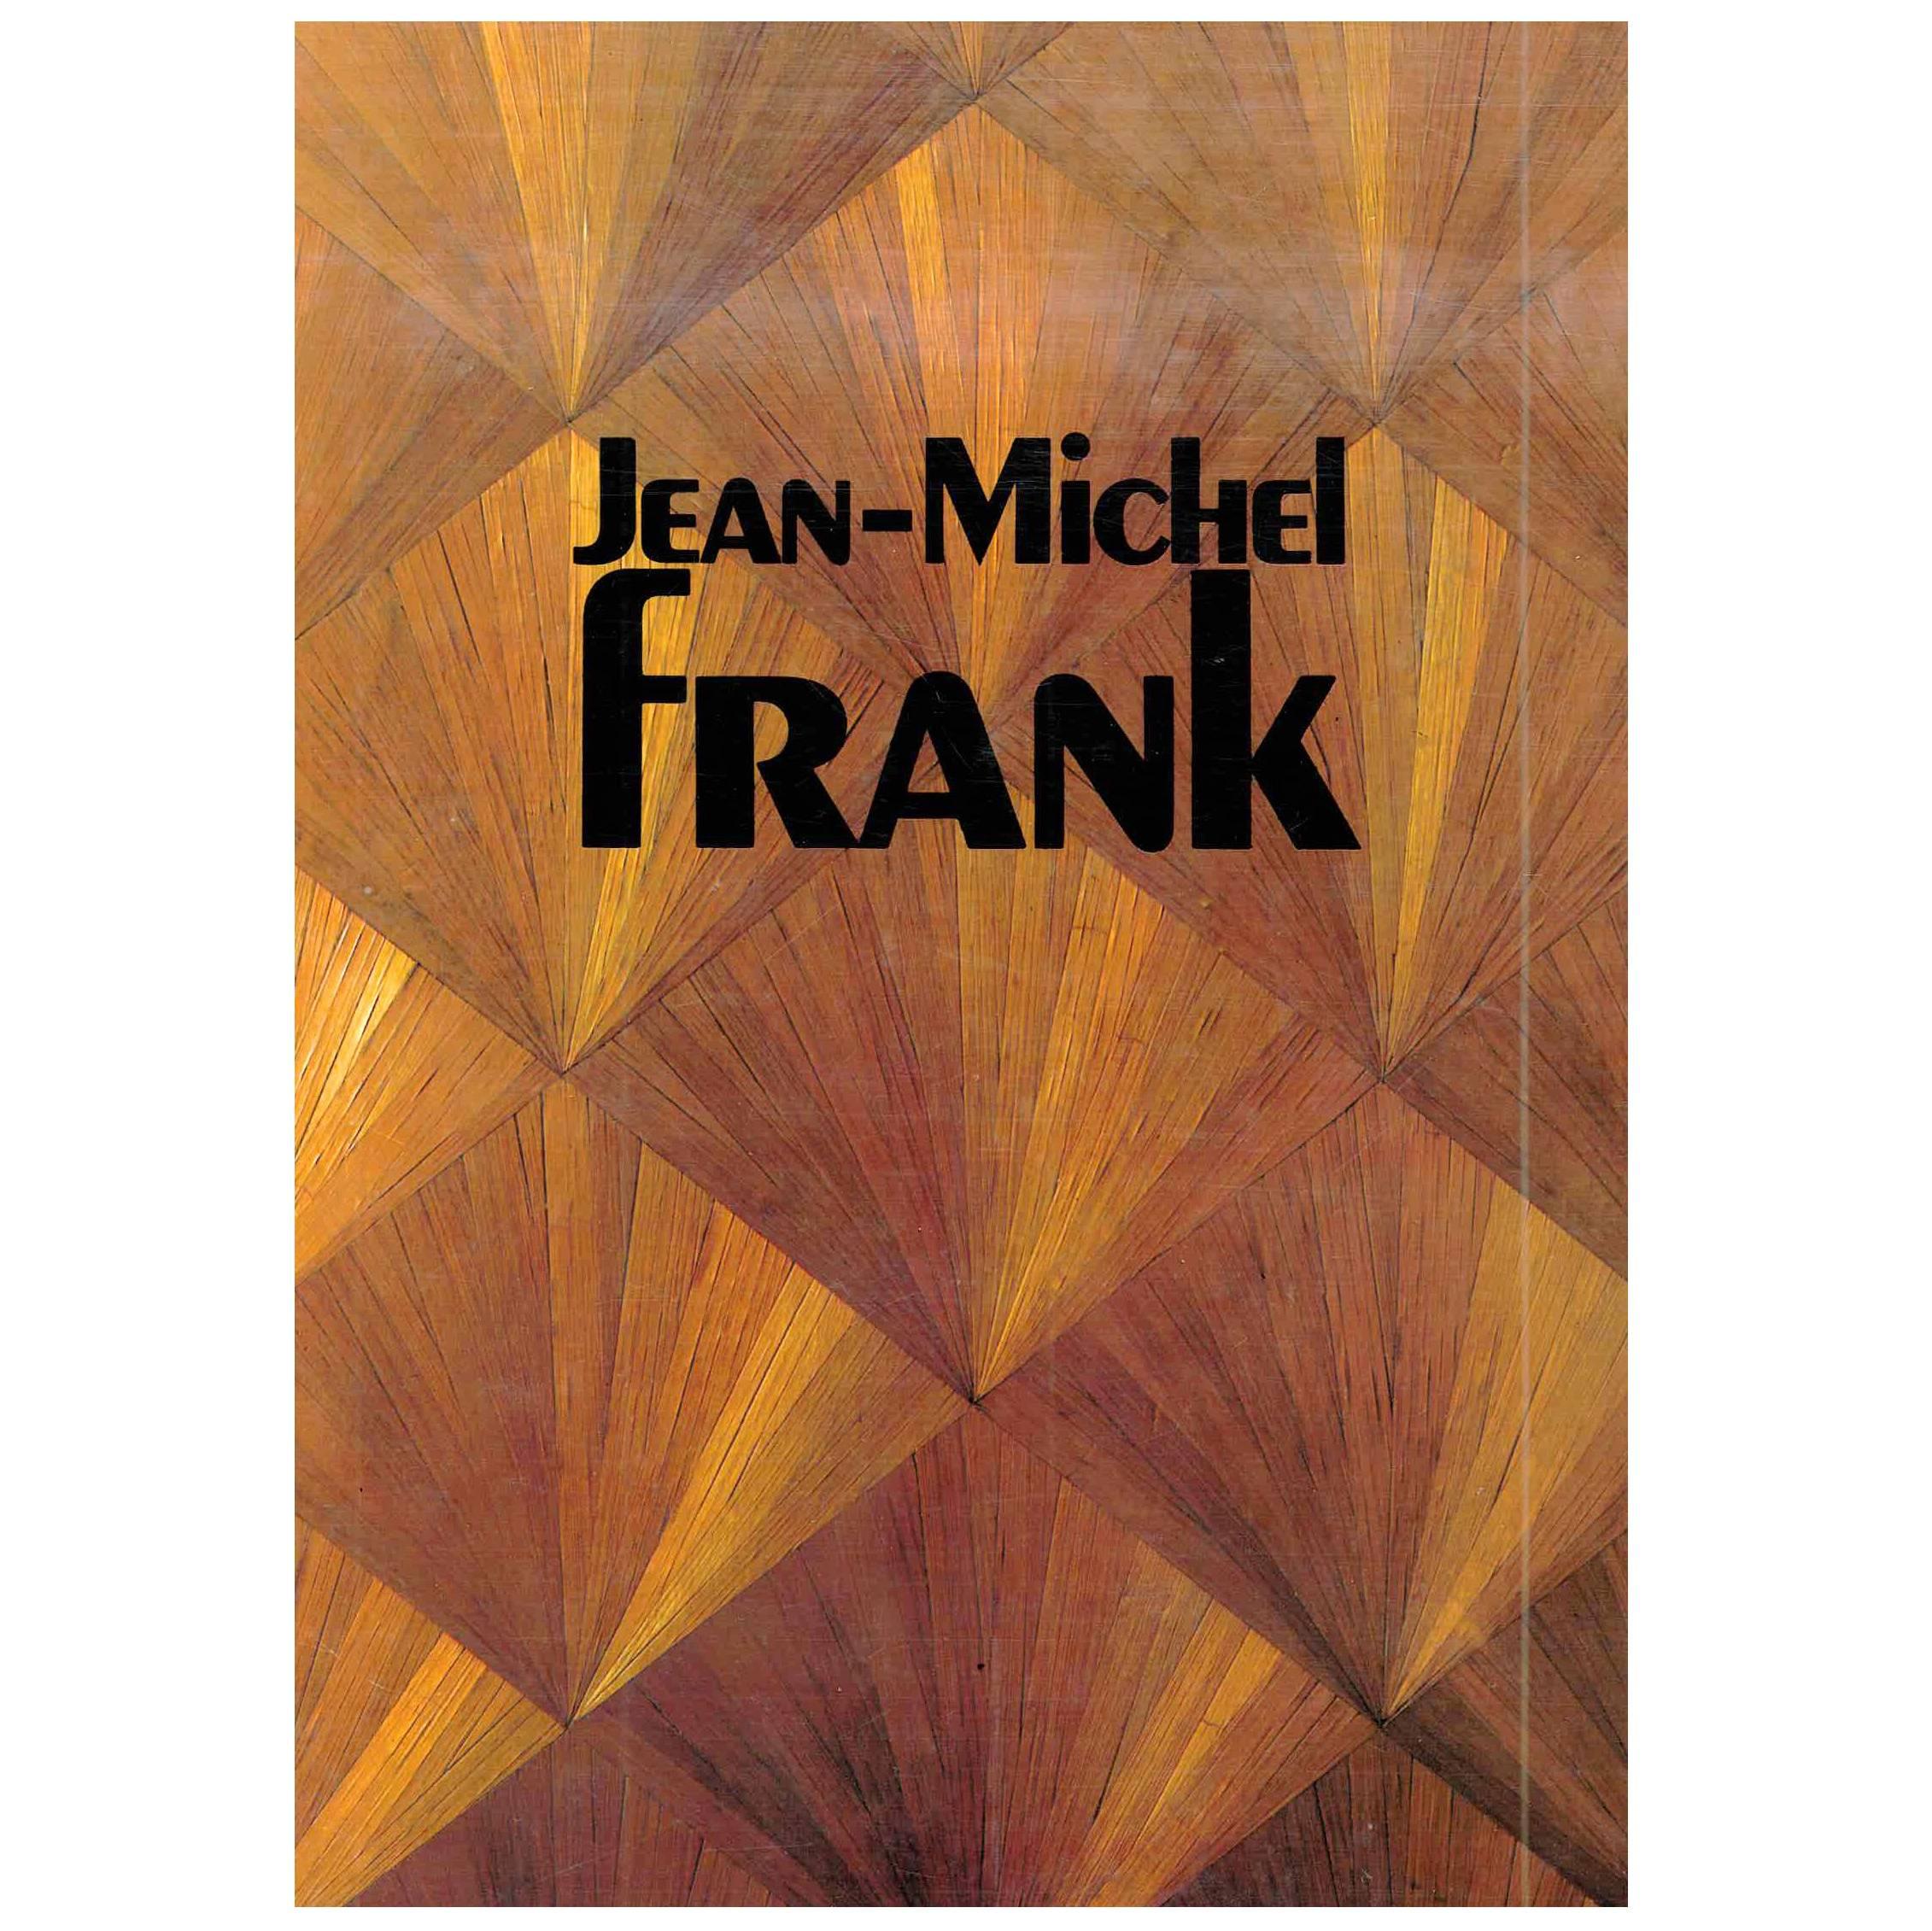 "Jean-Michel Frank" Book